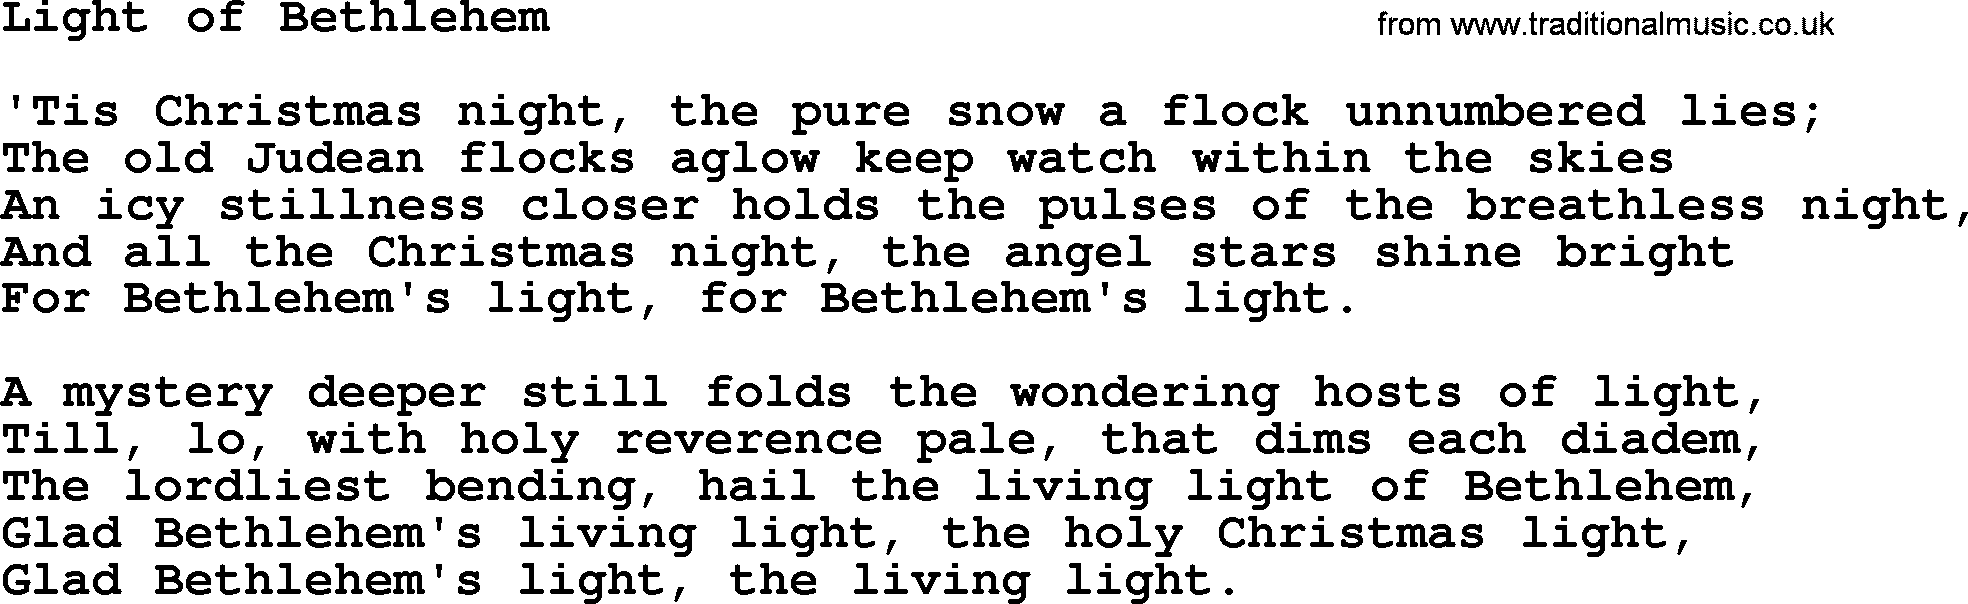 Christmas Hymns, Carols and Songs, title: Light Of Bethlehem, lyrics with PDF